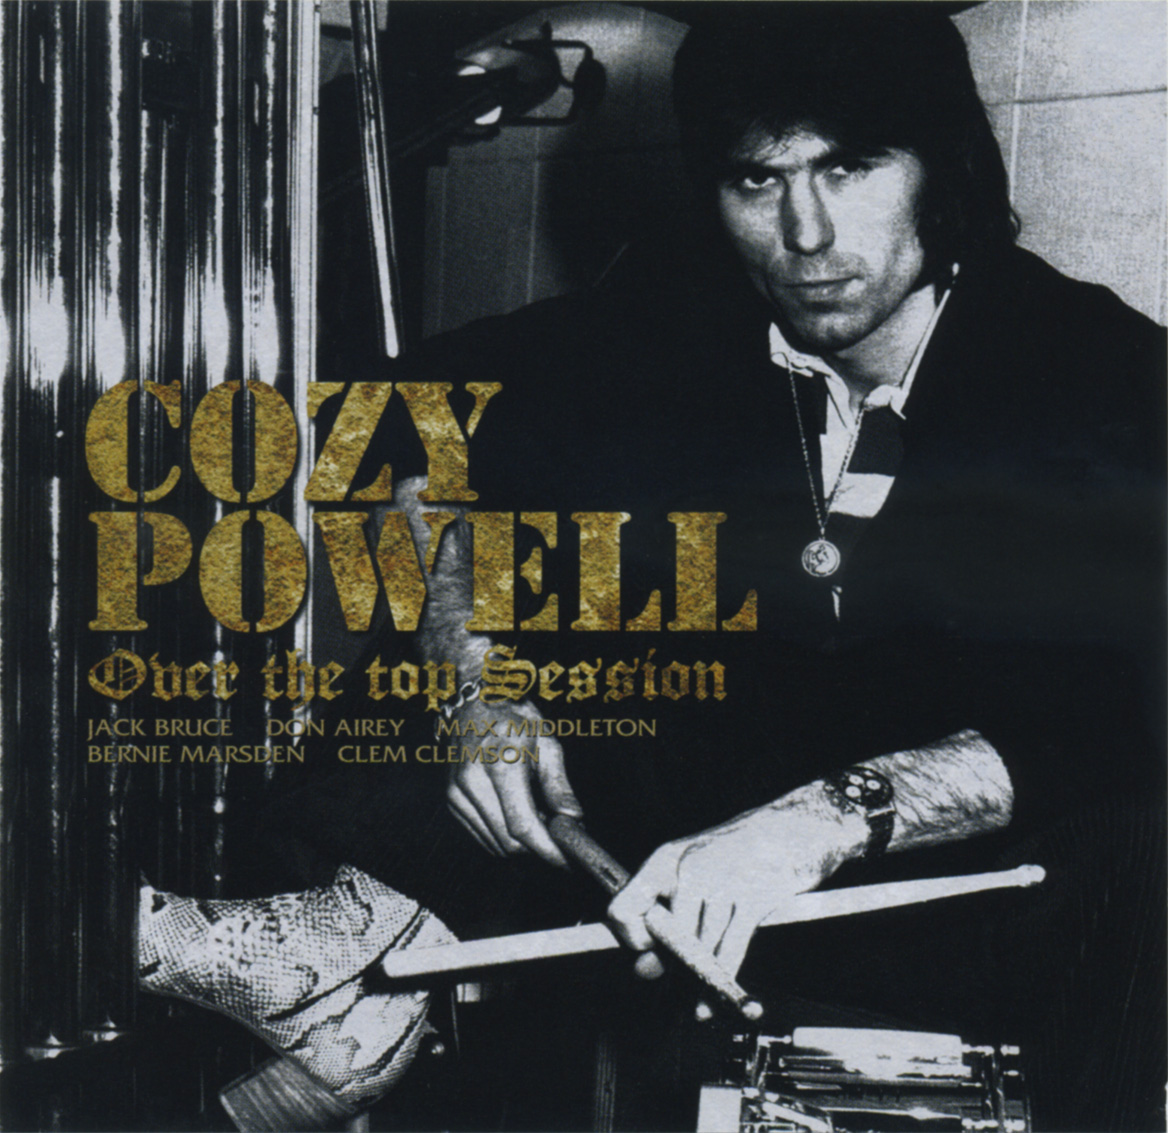 Cozy Powell - Over The Top (Vinyl, LP, Album) at Discogs